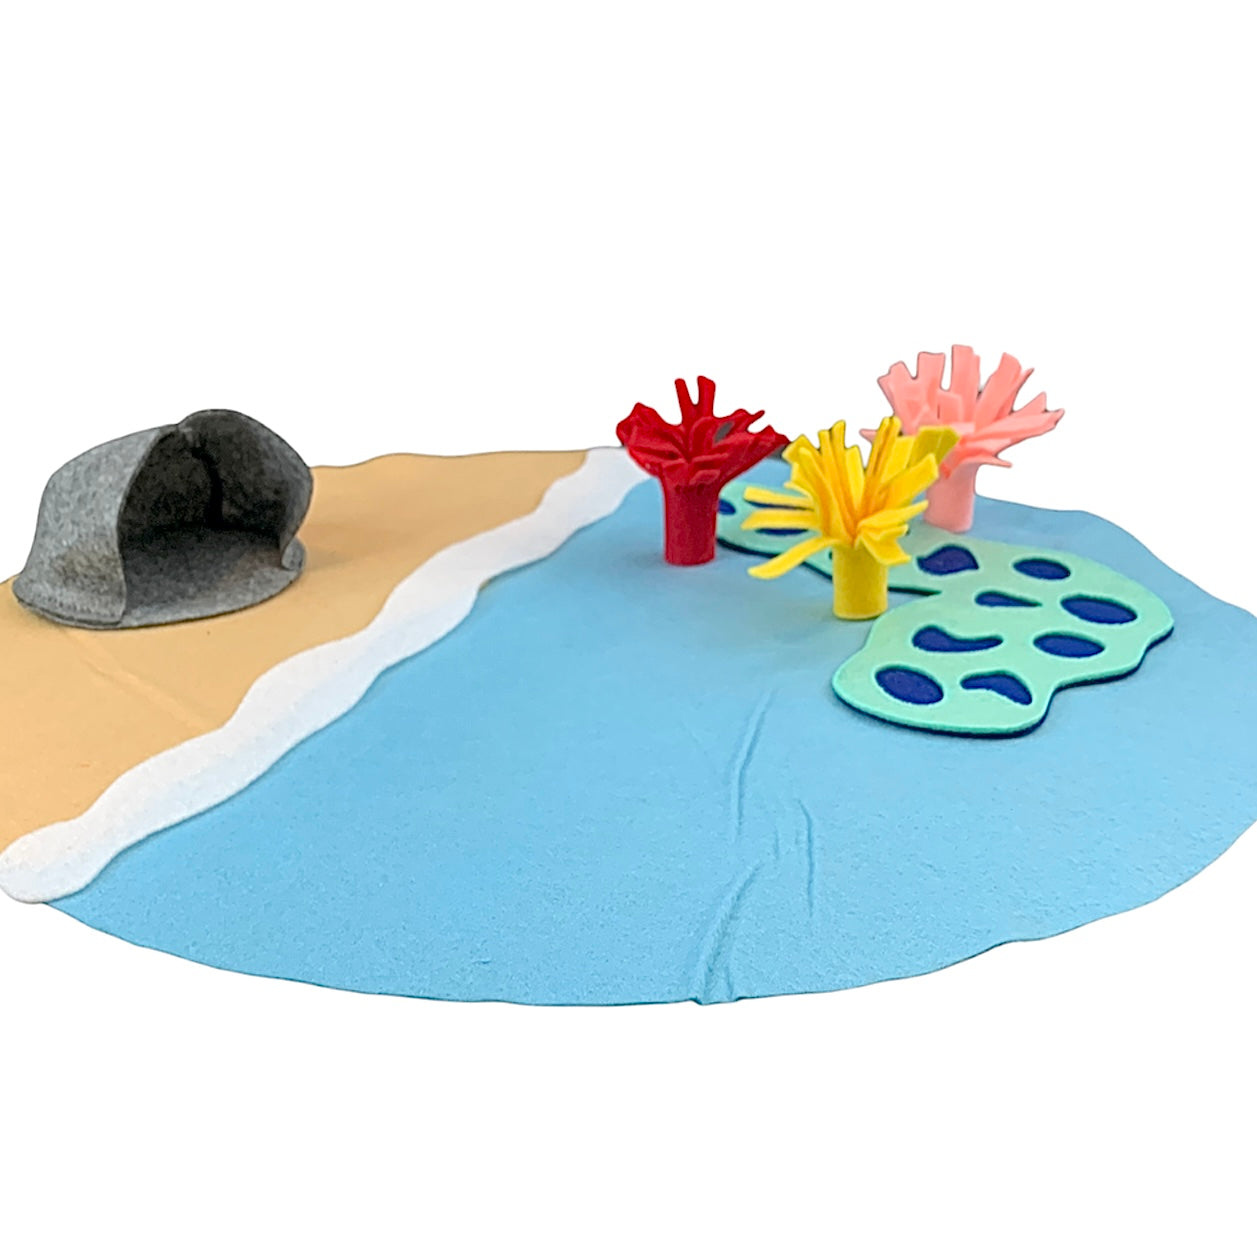 Seaside Play Mat